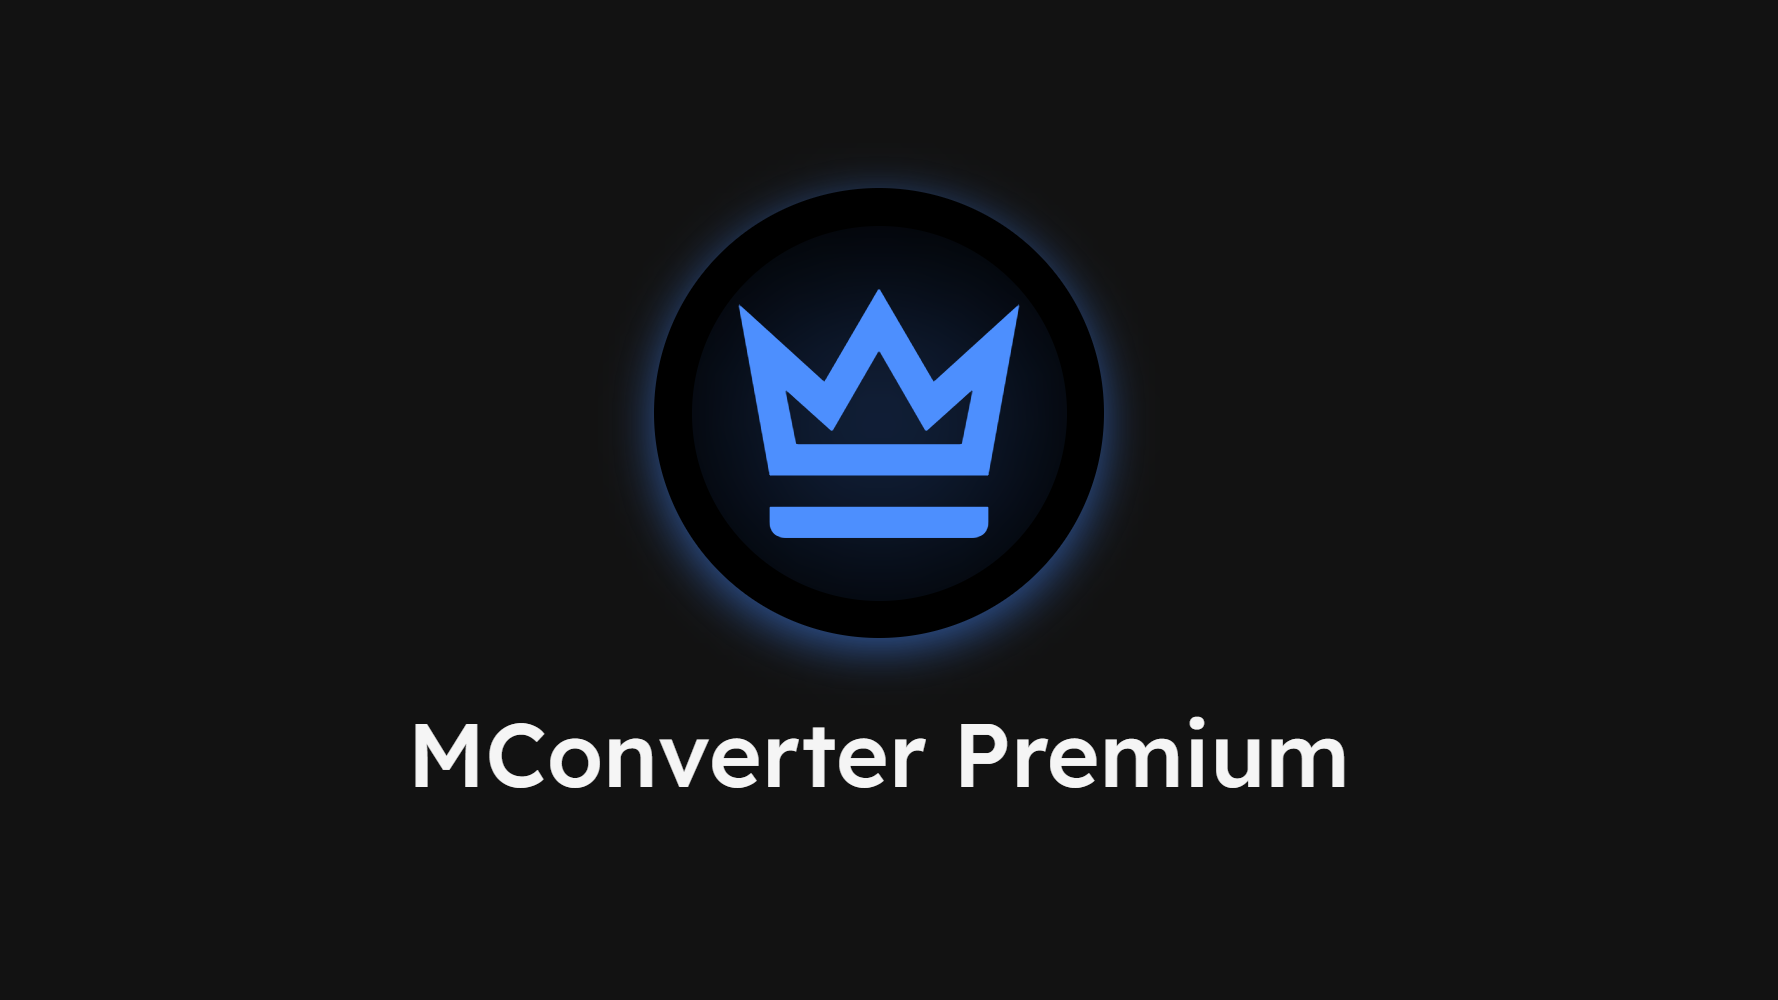 MConverter Premium badge